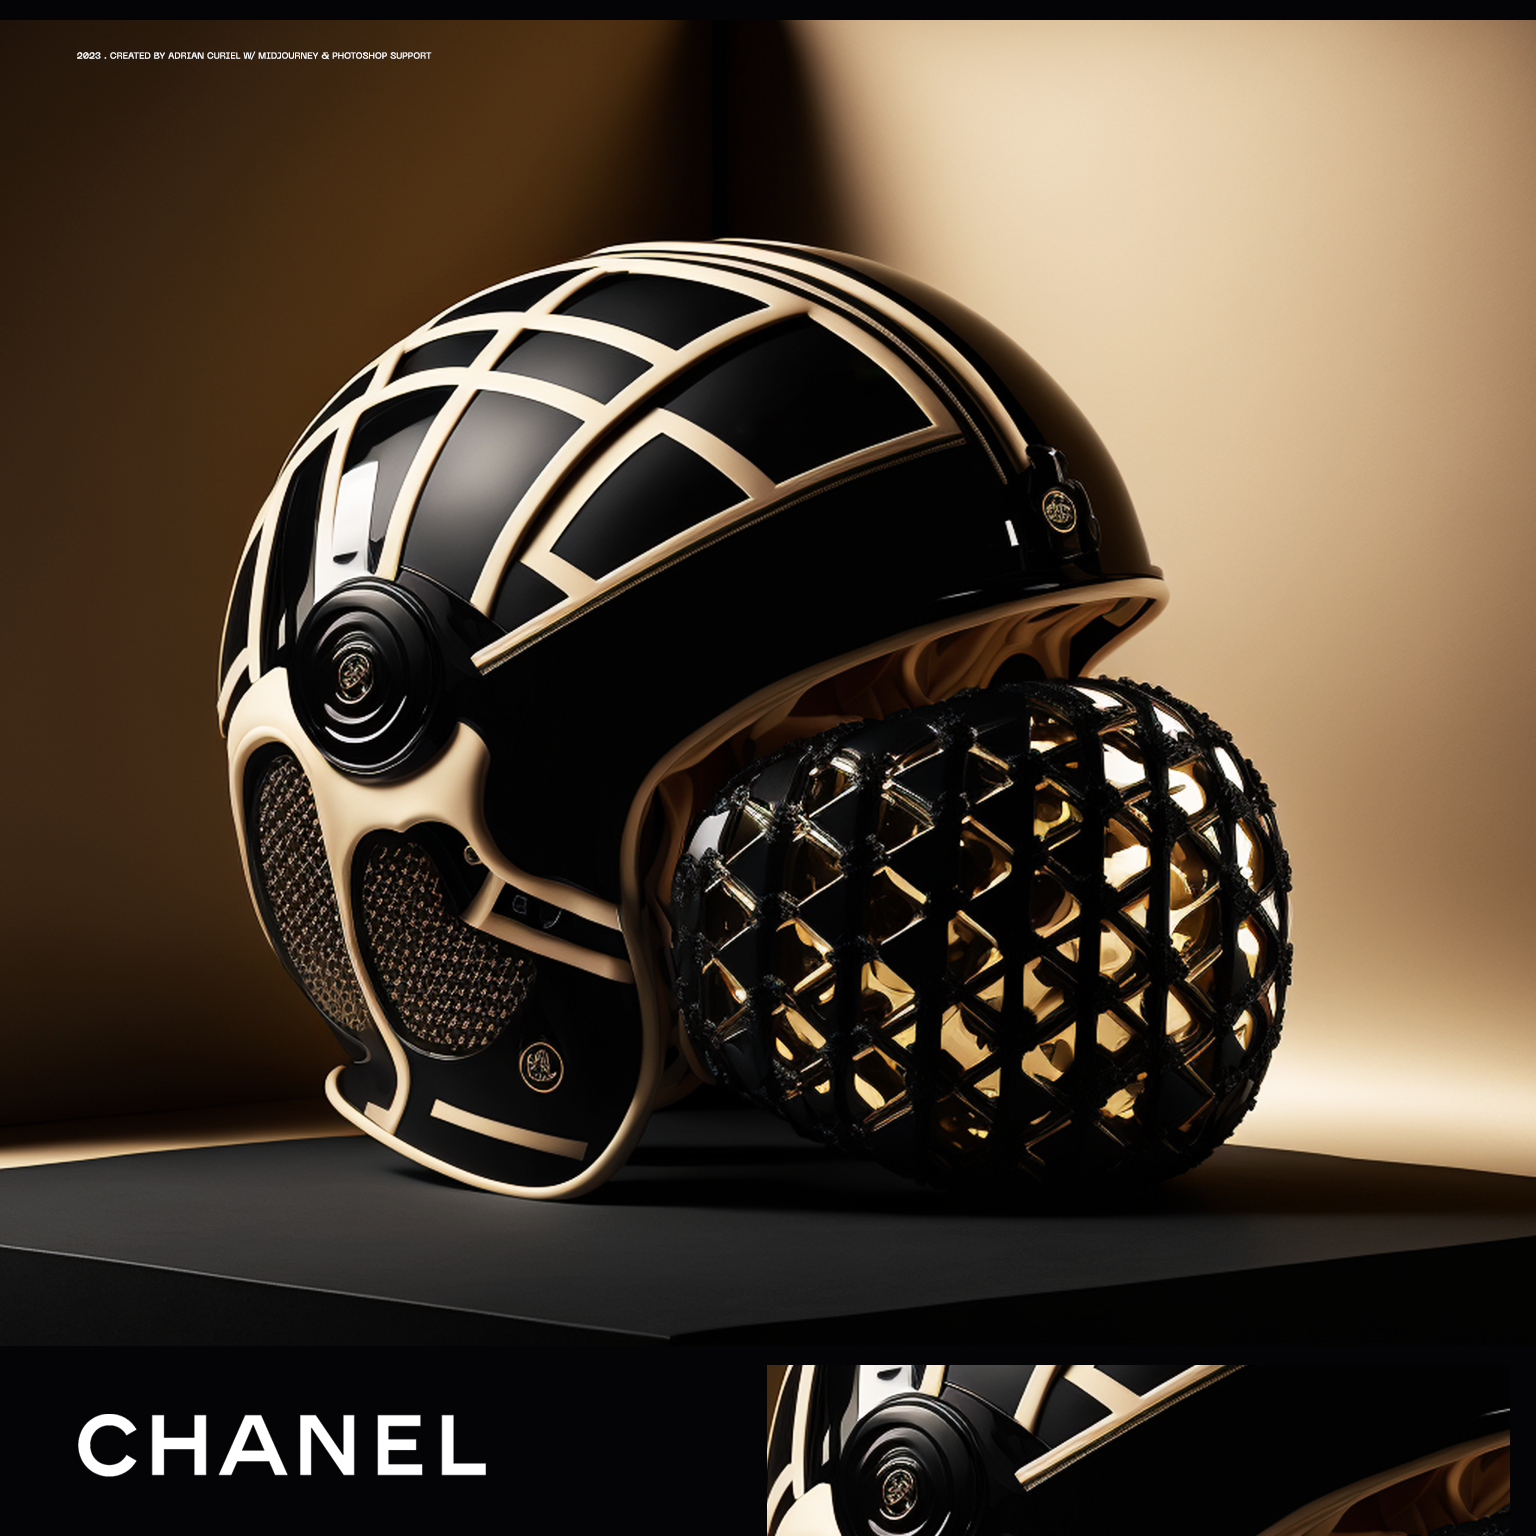 Chanels-x-nfl-helmet.png